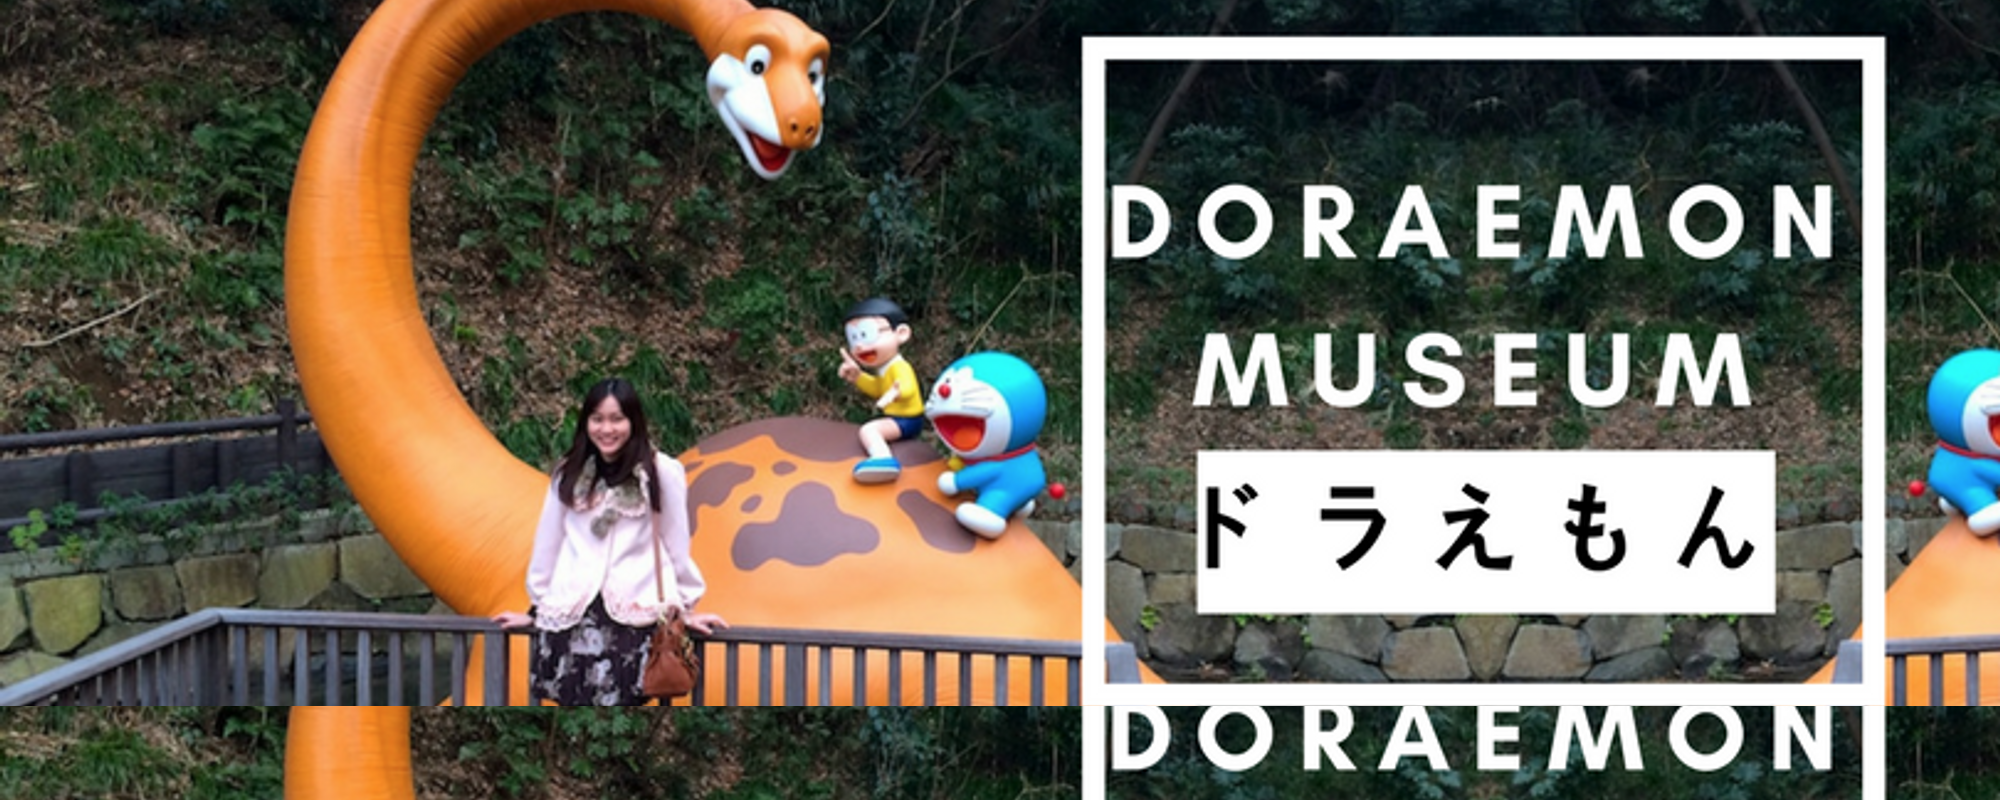 🇯🇵 [Travel Japan JR 带你游日本] Doraemon Museum | ドラえもんミュージアム